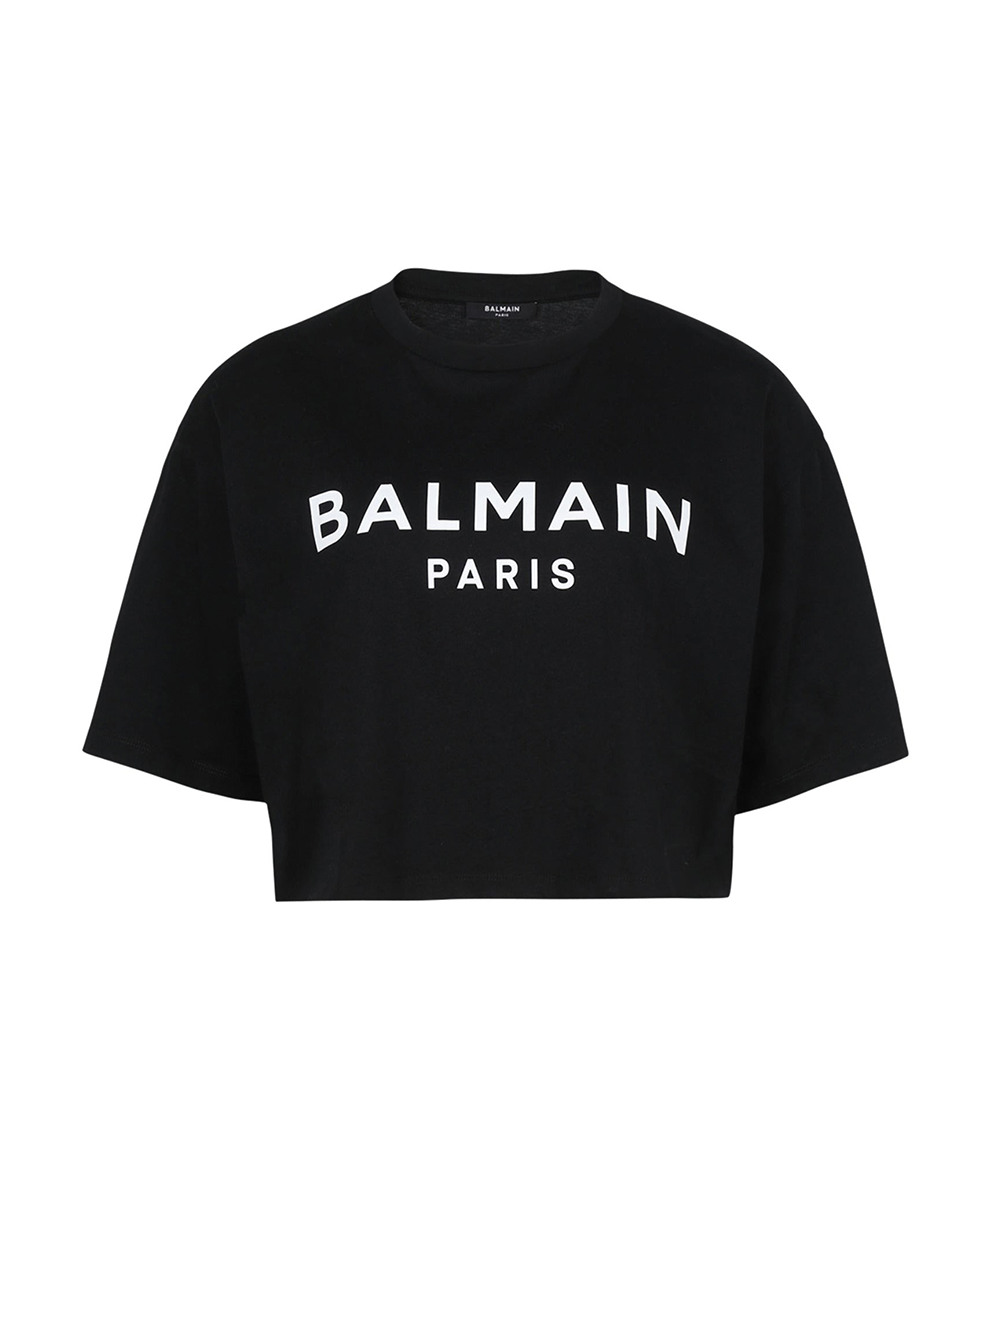    Balmain-Balmain-Print-Cropped-T-Shirt-Black-1